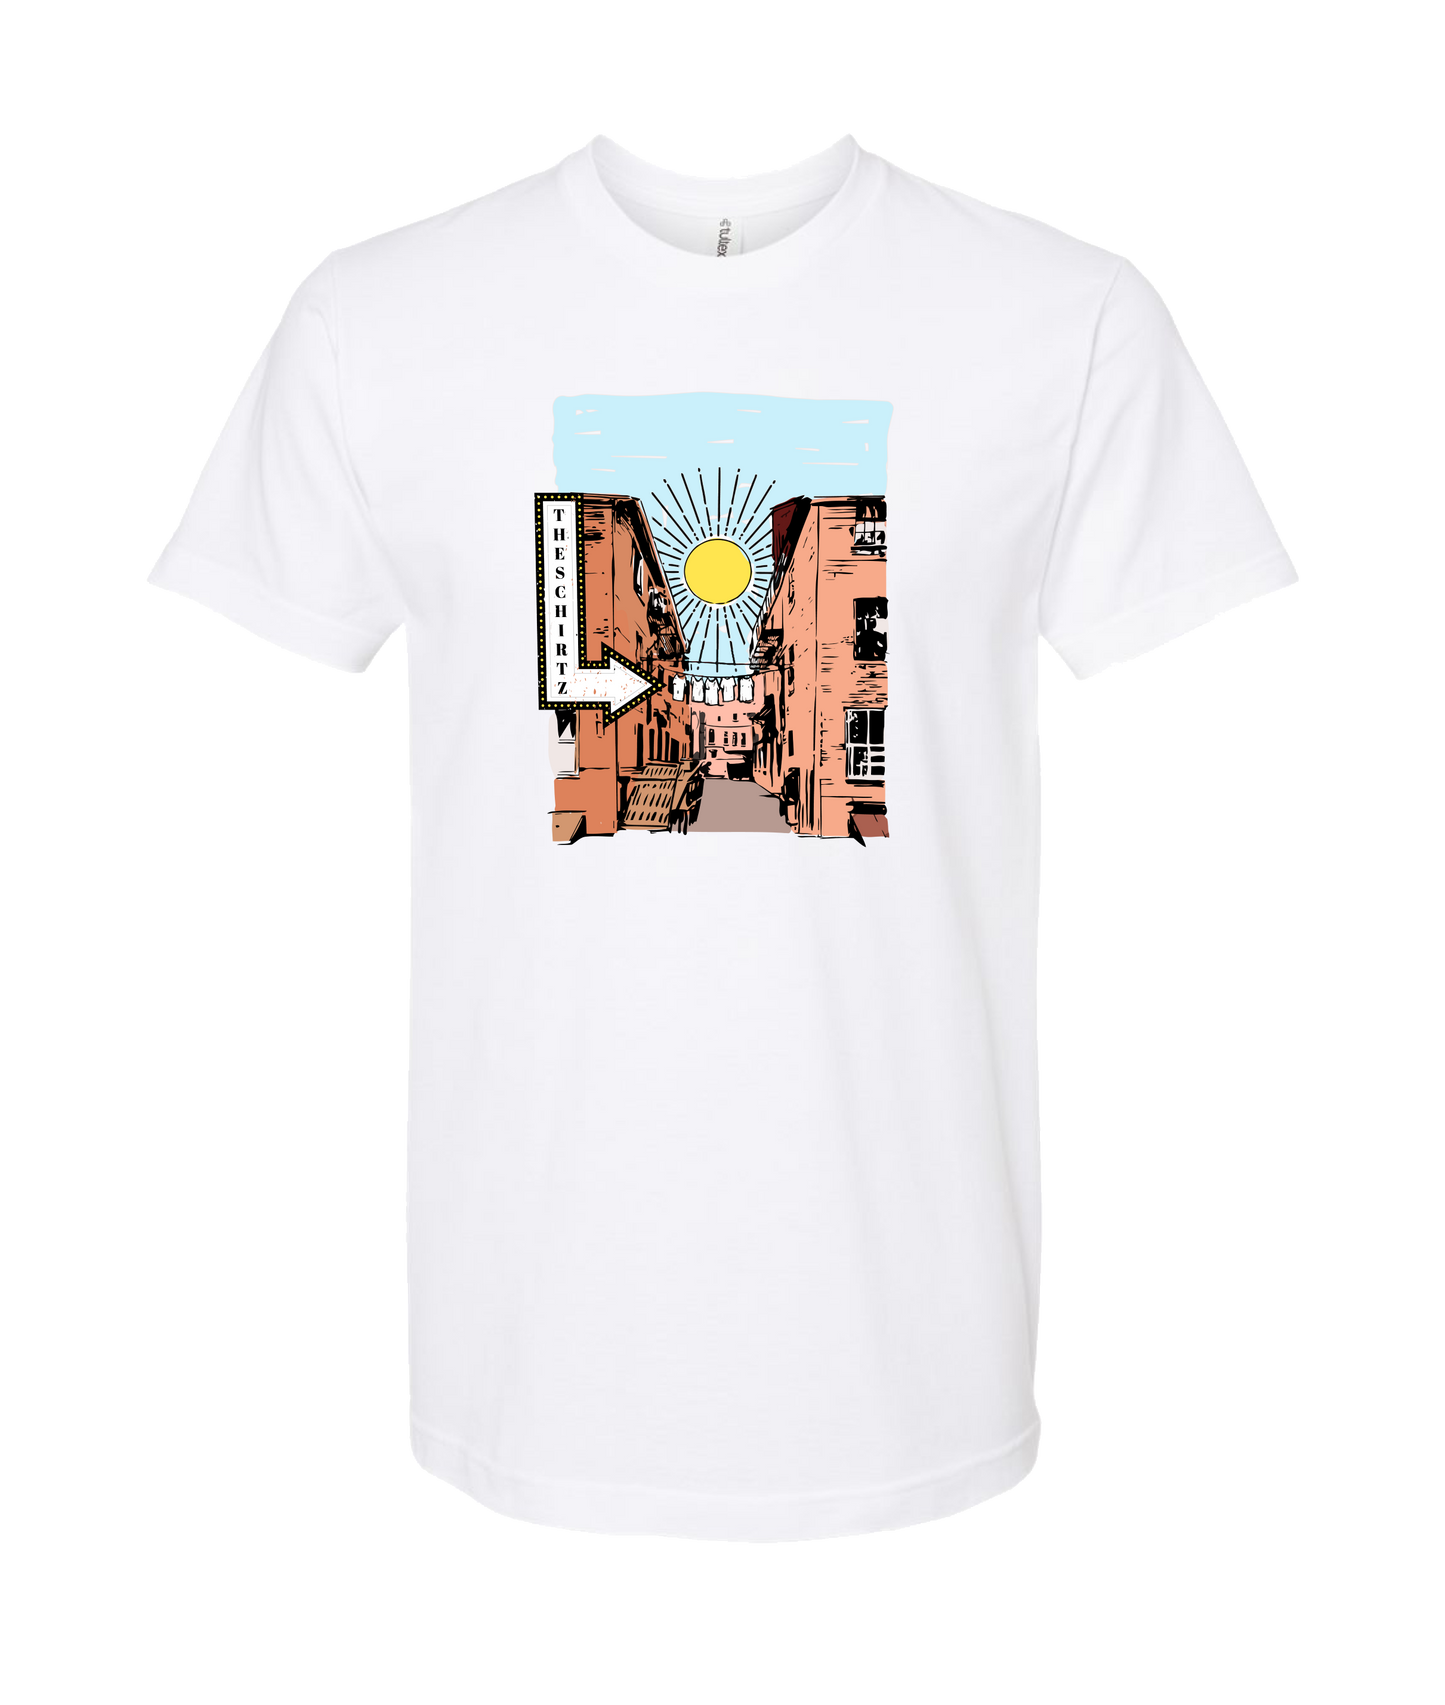 theschirtz - The City - White T-Shirt